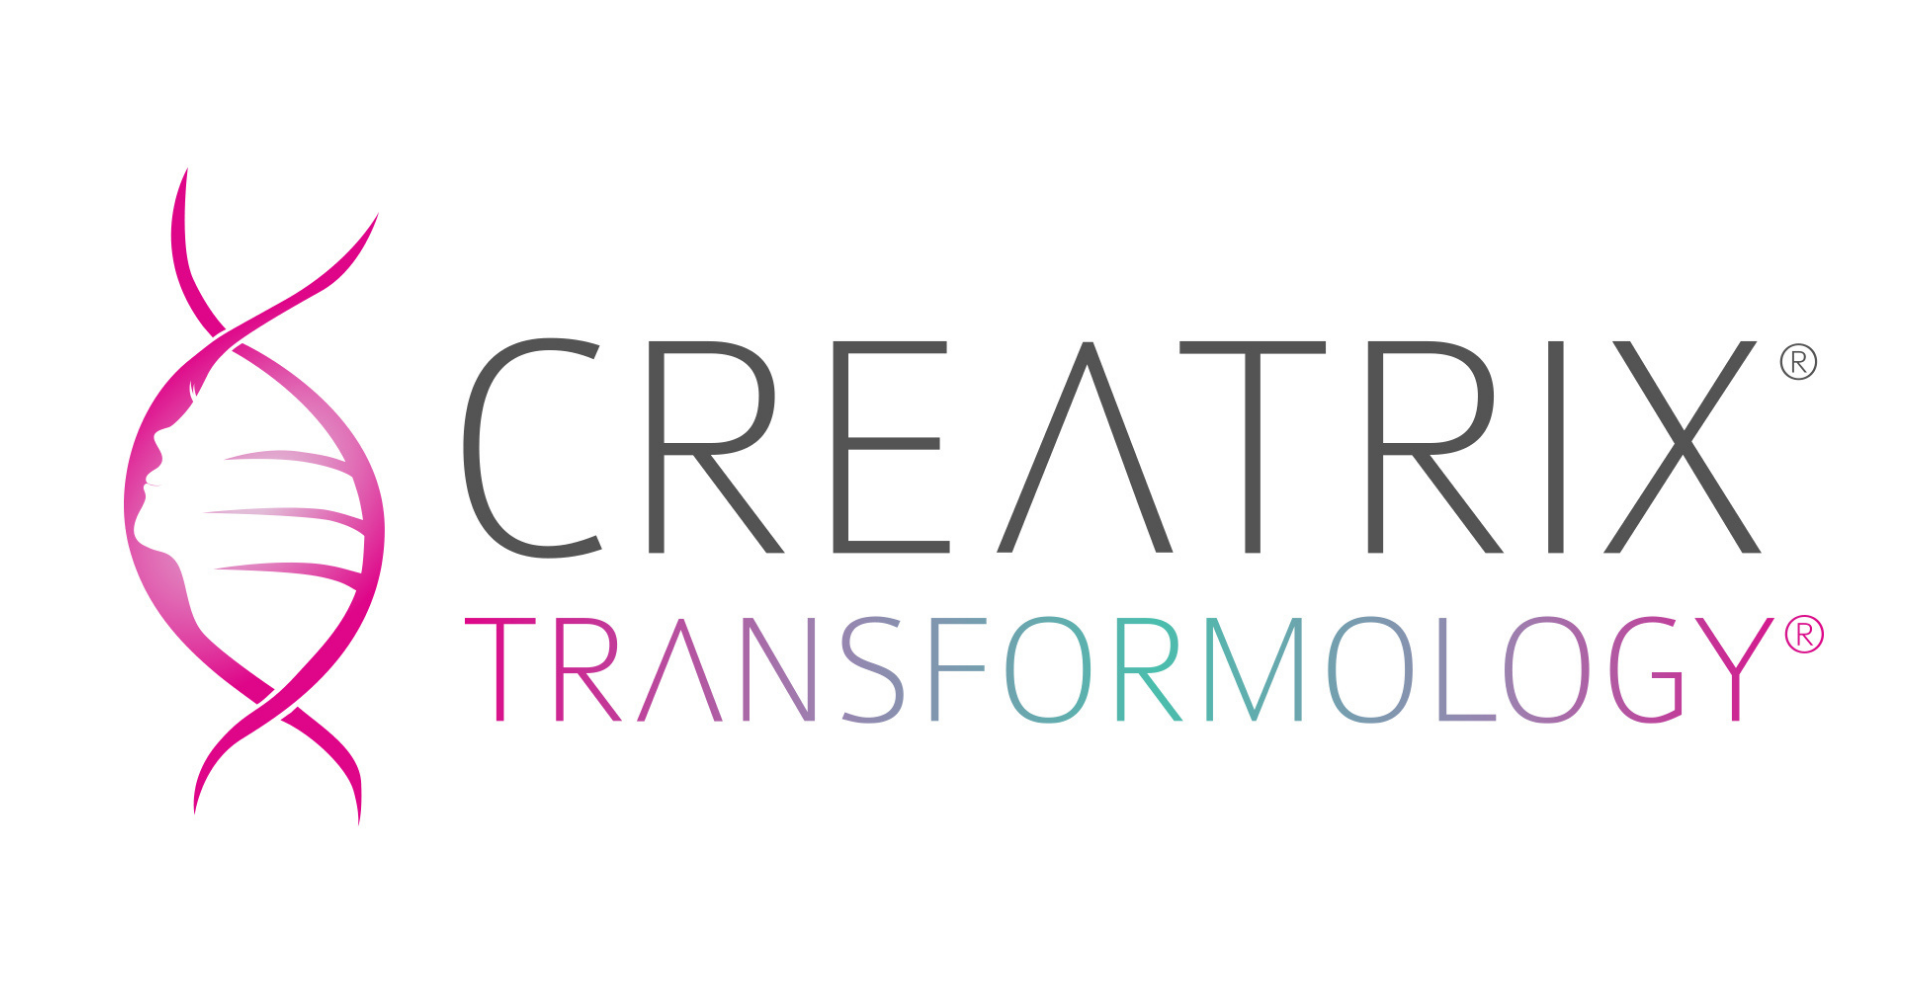 Creatrix Transformology